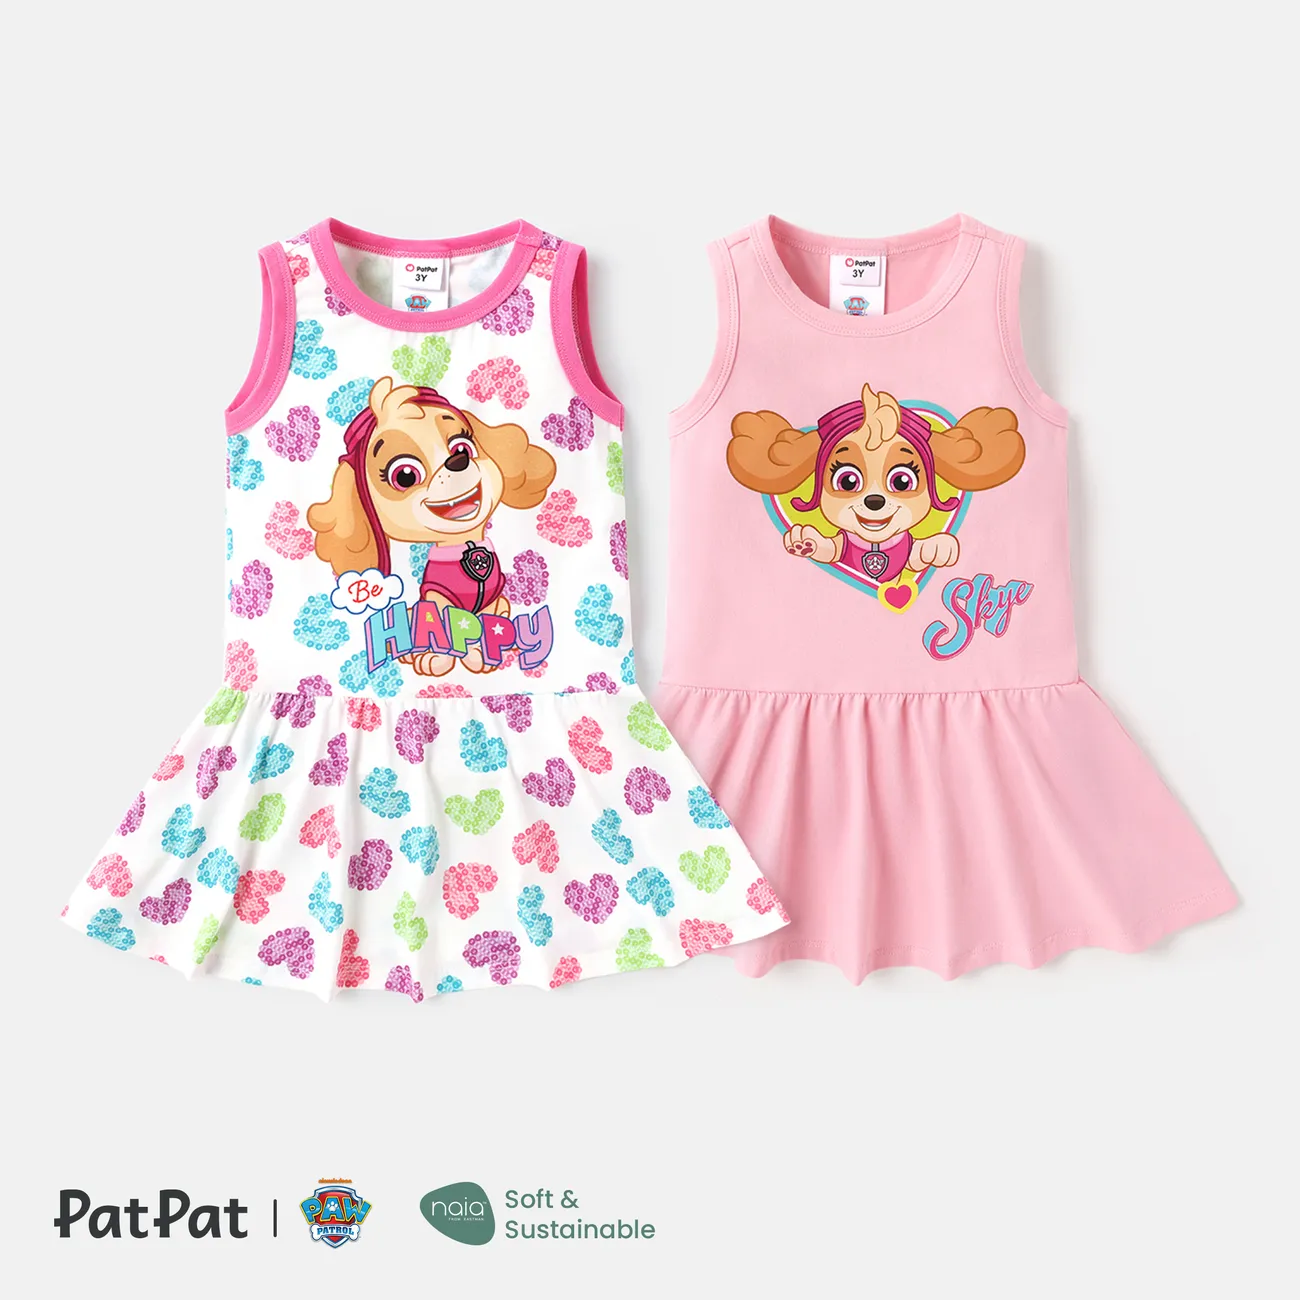 PAW Patrol Toddler Girl Heart Print Naia/Cotton Sleeveless Dress Pink big image 1